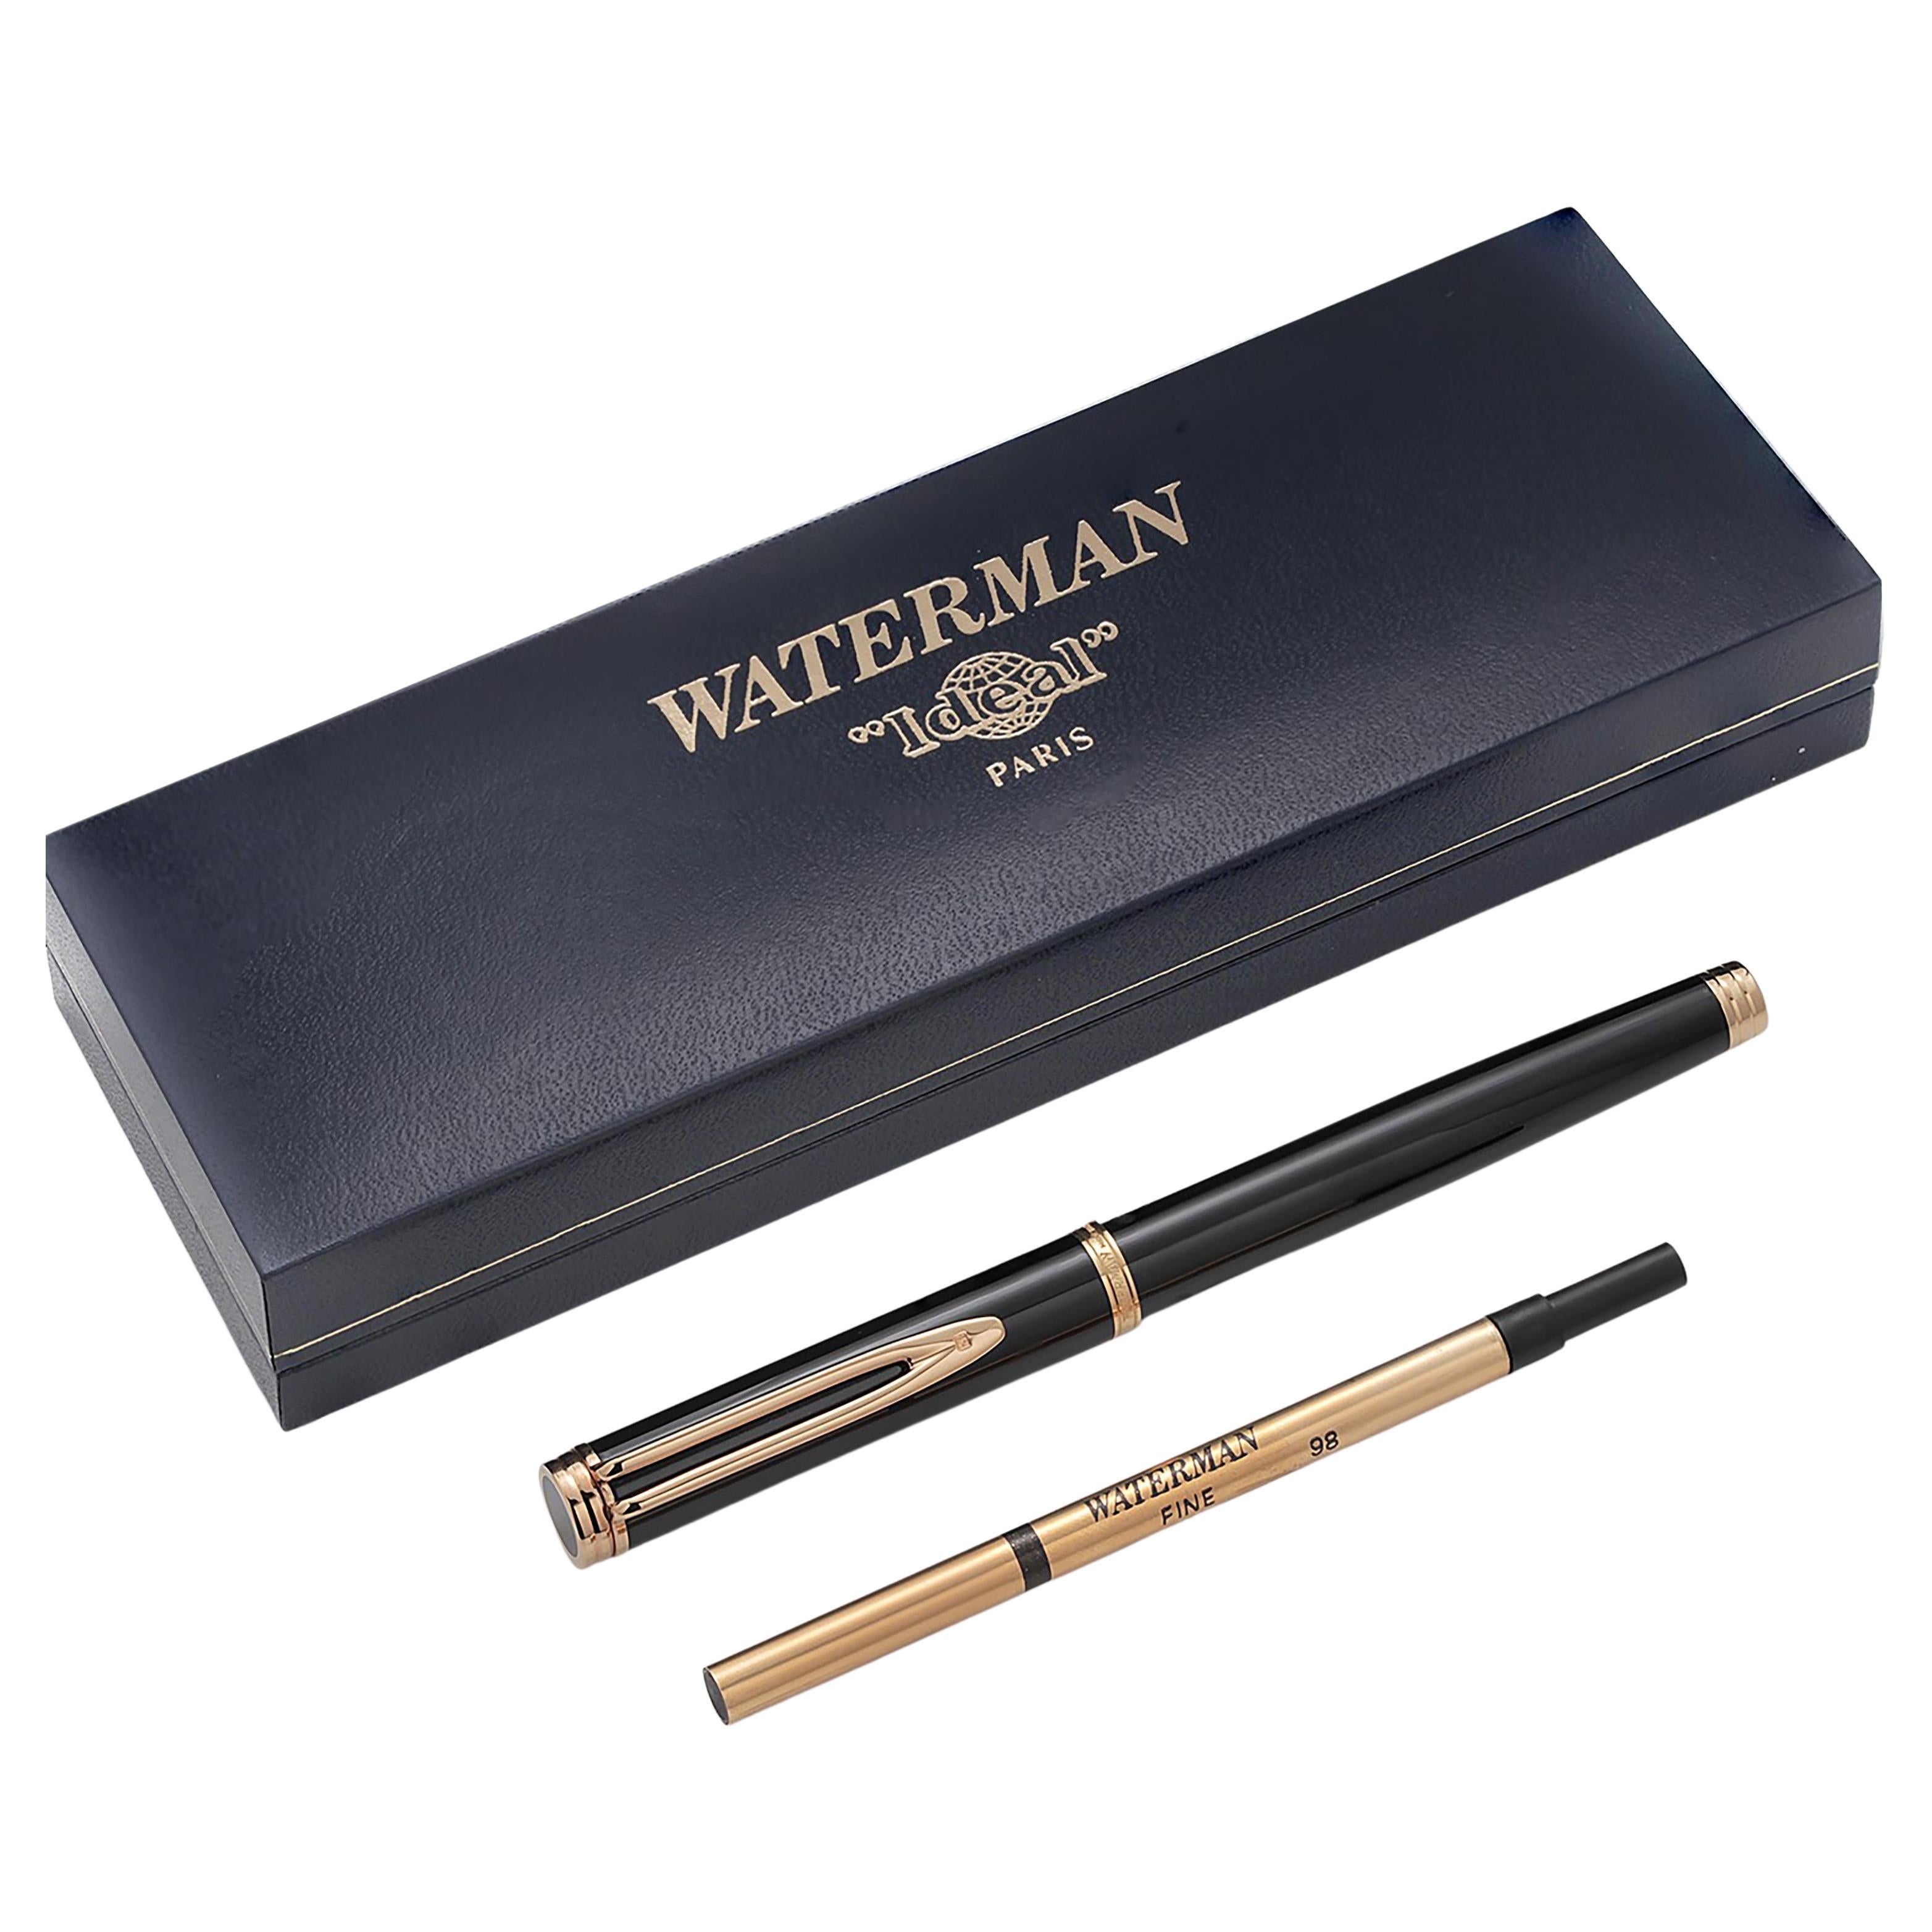 Used Waterman Pens - 5 For Sale on 1stDibs